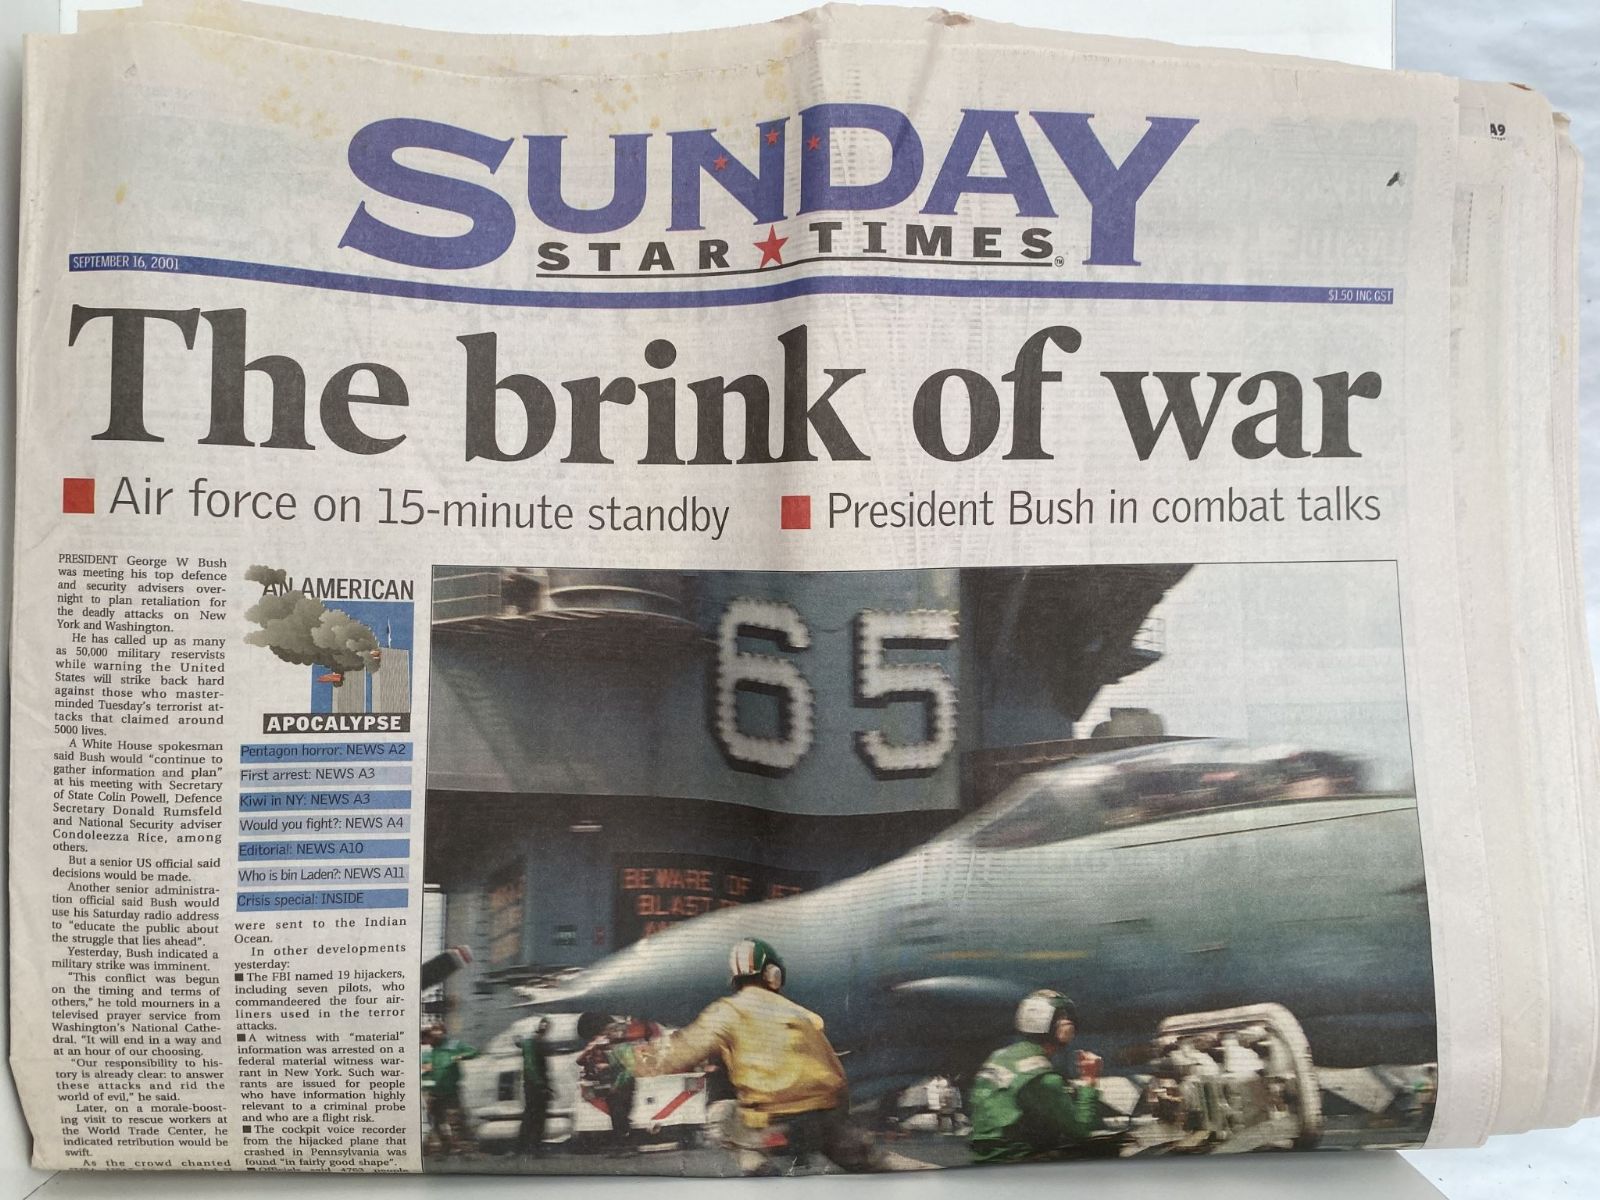 OLD NEWSPAPER: Sunday Star Times 16 September 2001 - 9/11 Terror Attacks